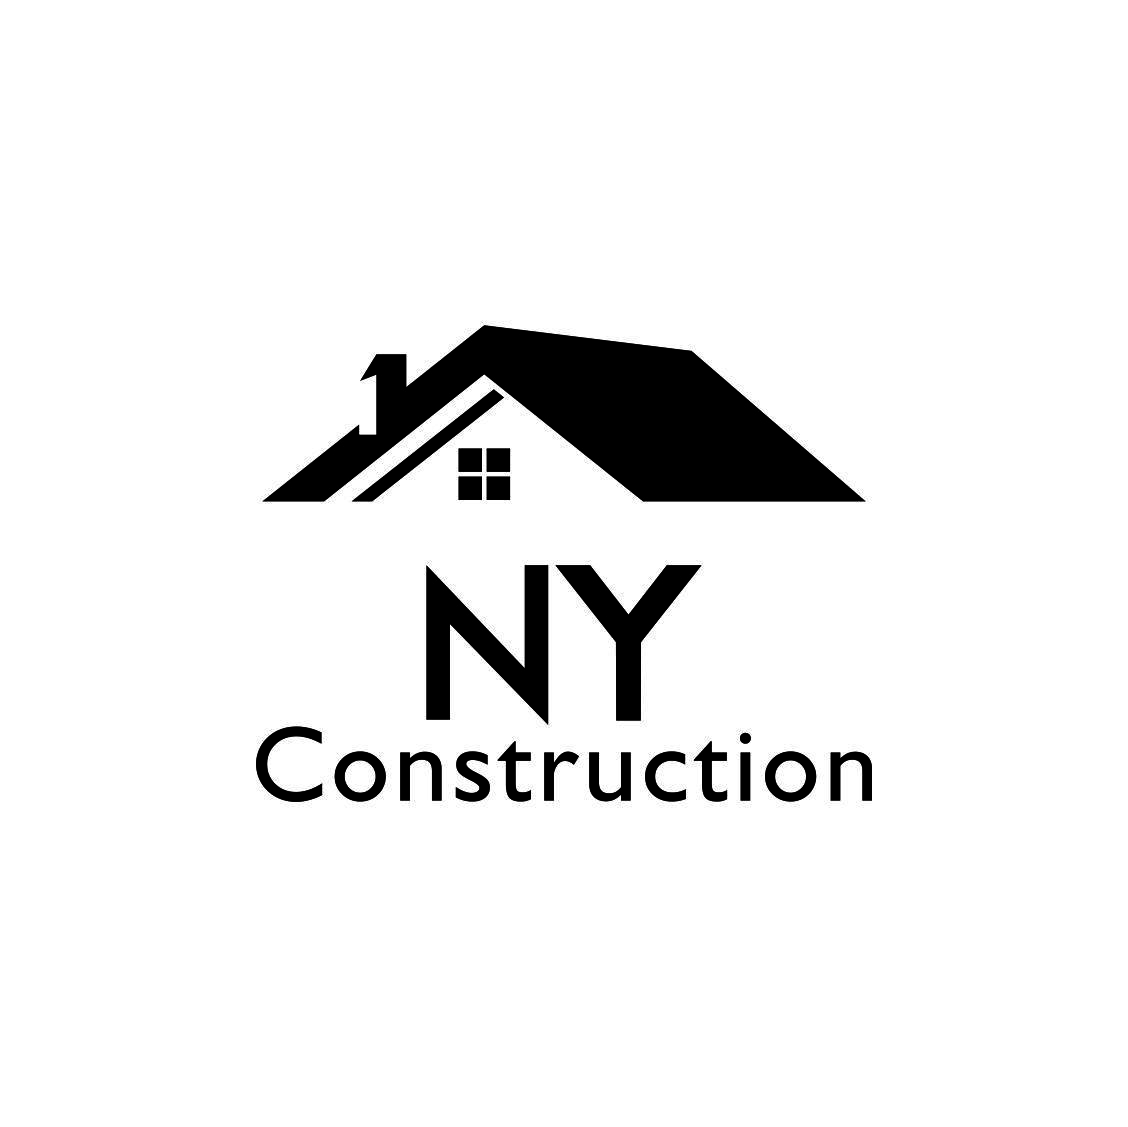 Nuoya Construction Inc's logo